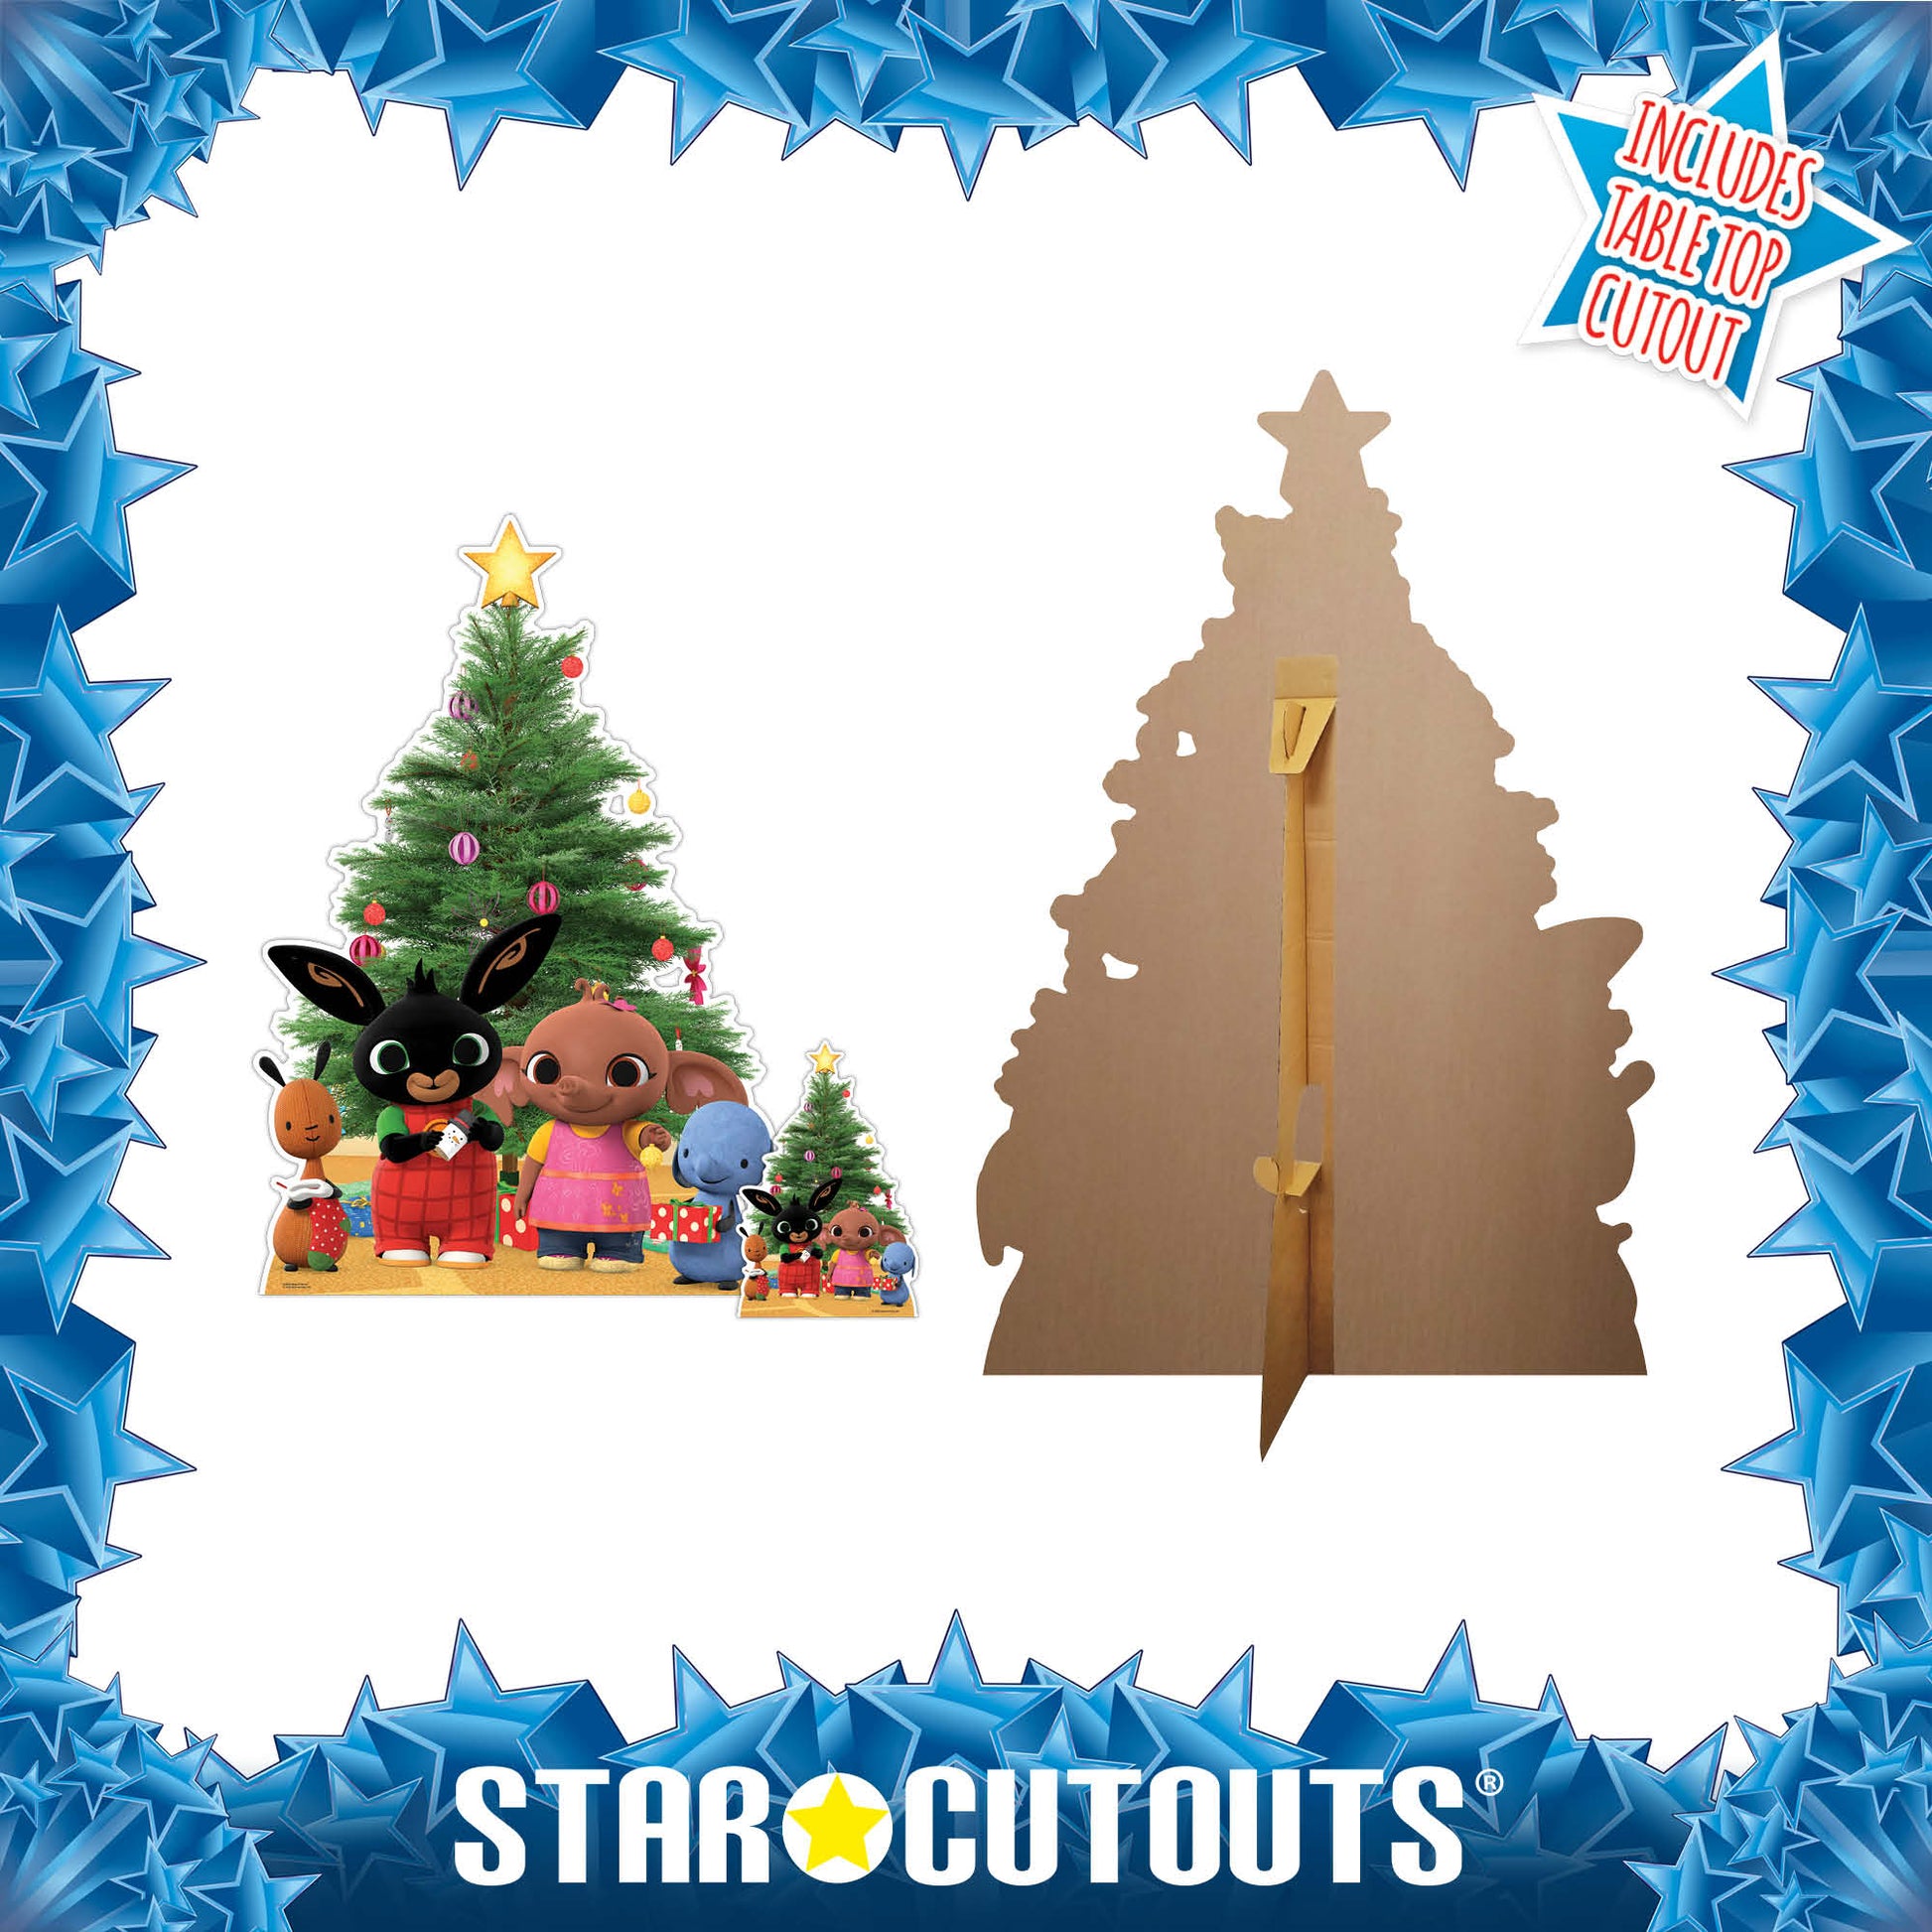 SC4335 Bing Christmas Cardboard Cut Out Height 136cm - Star Cutouts